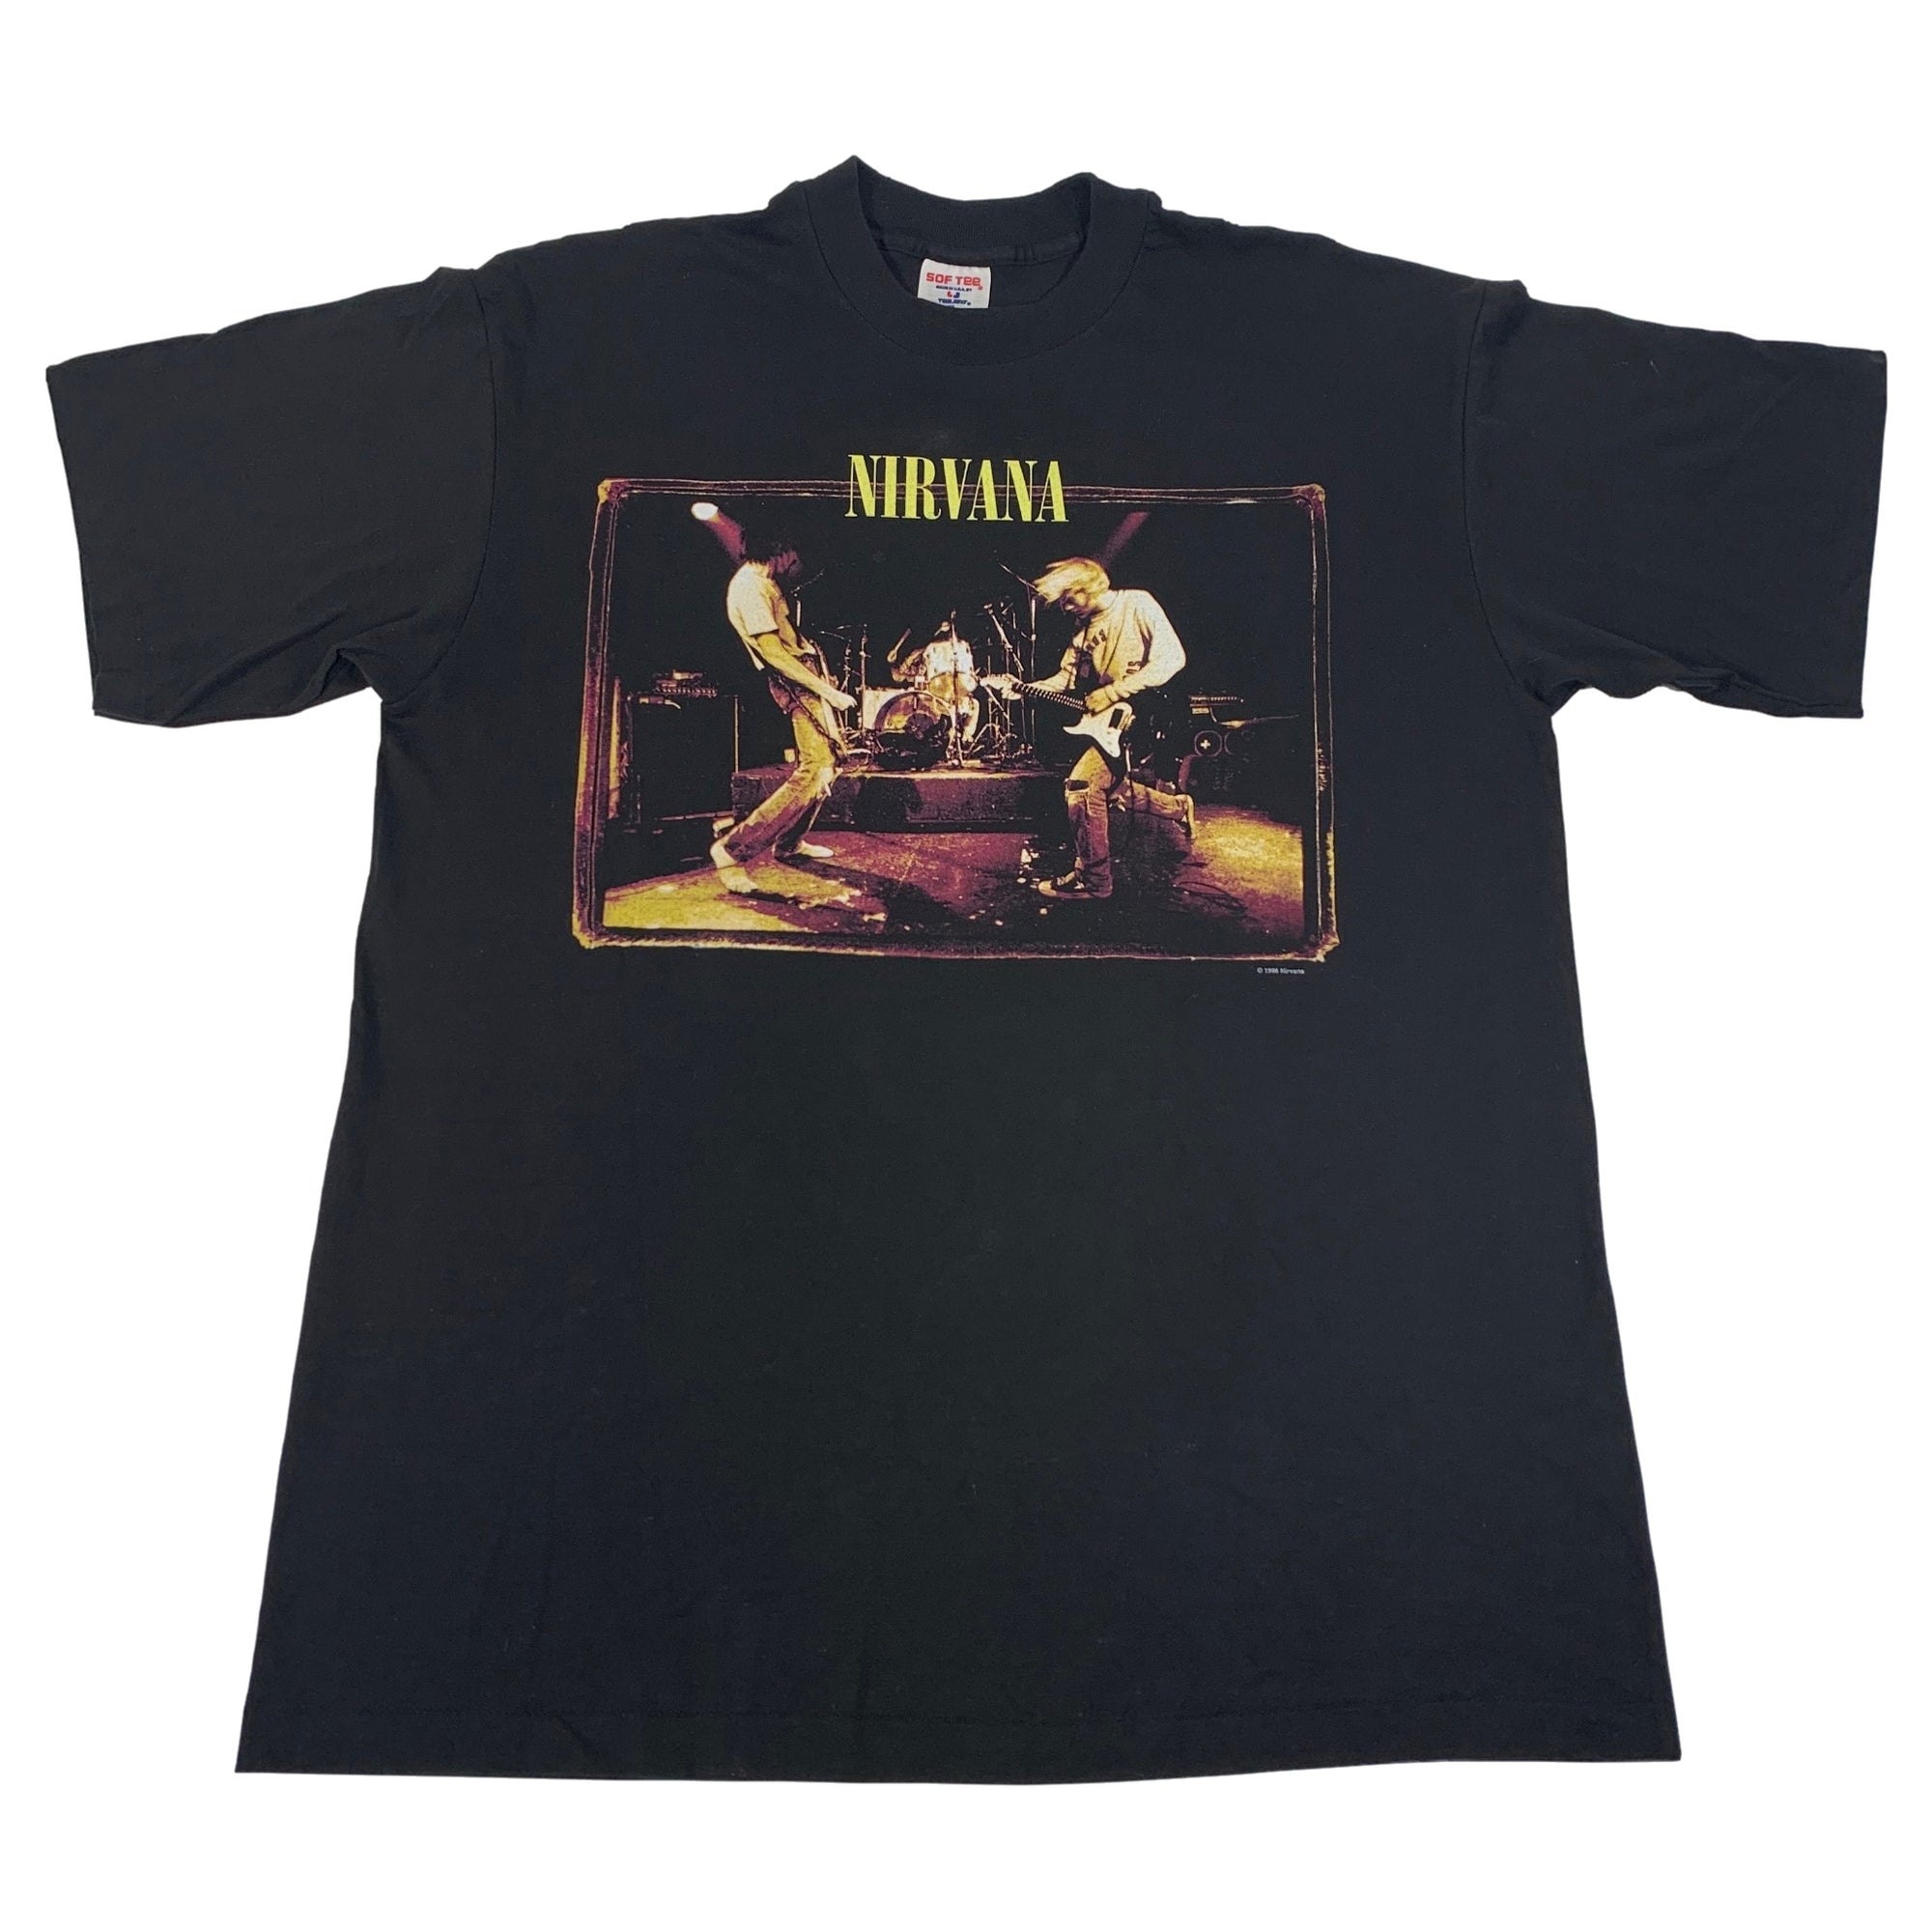 Vintage Nirvana "From The Muddy Banks" T-Shirt - jointcustodydc